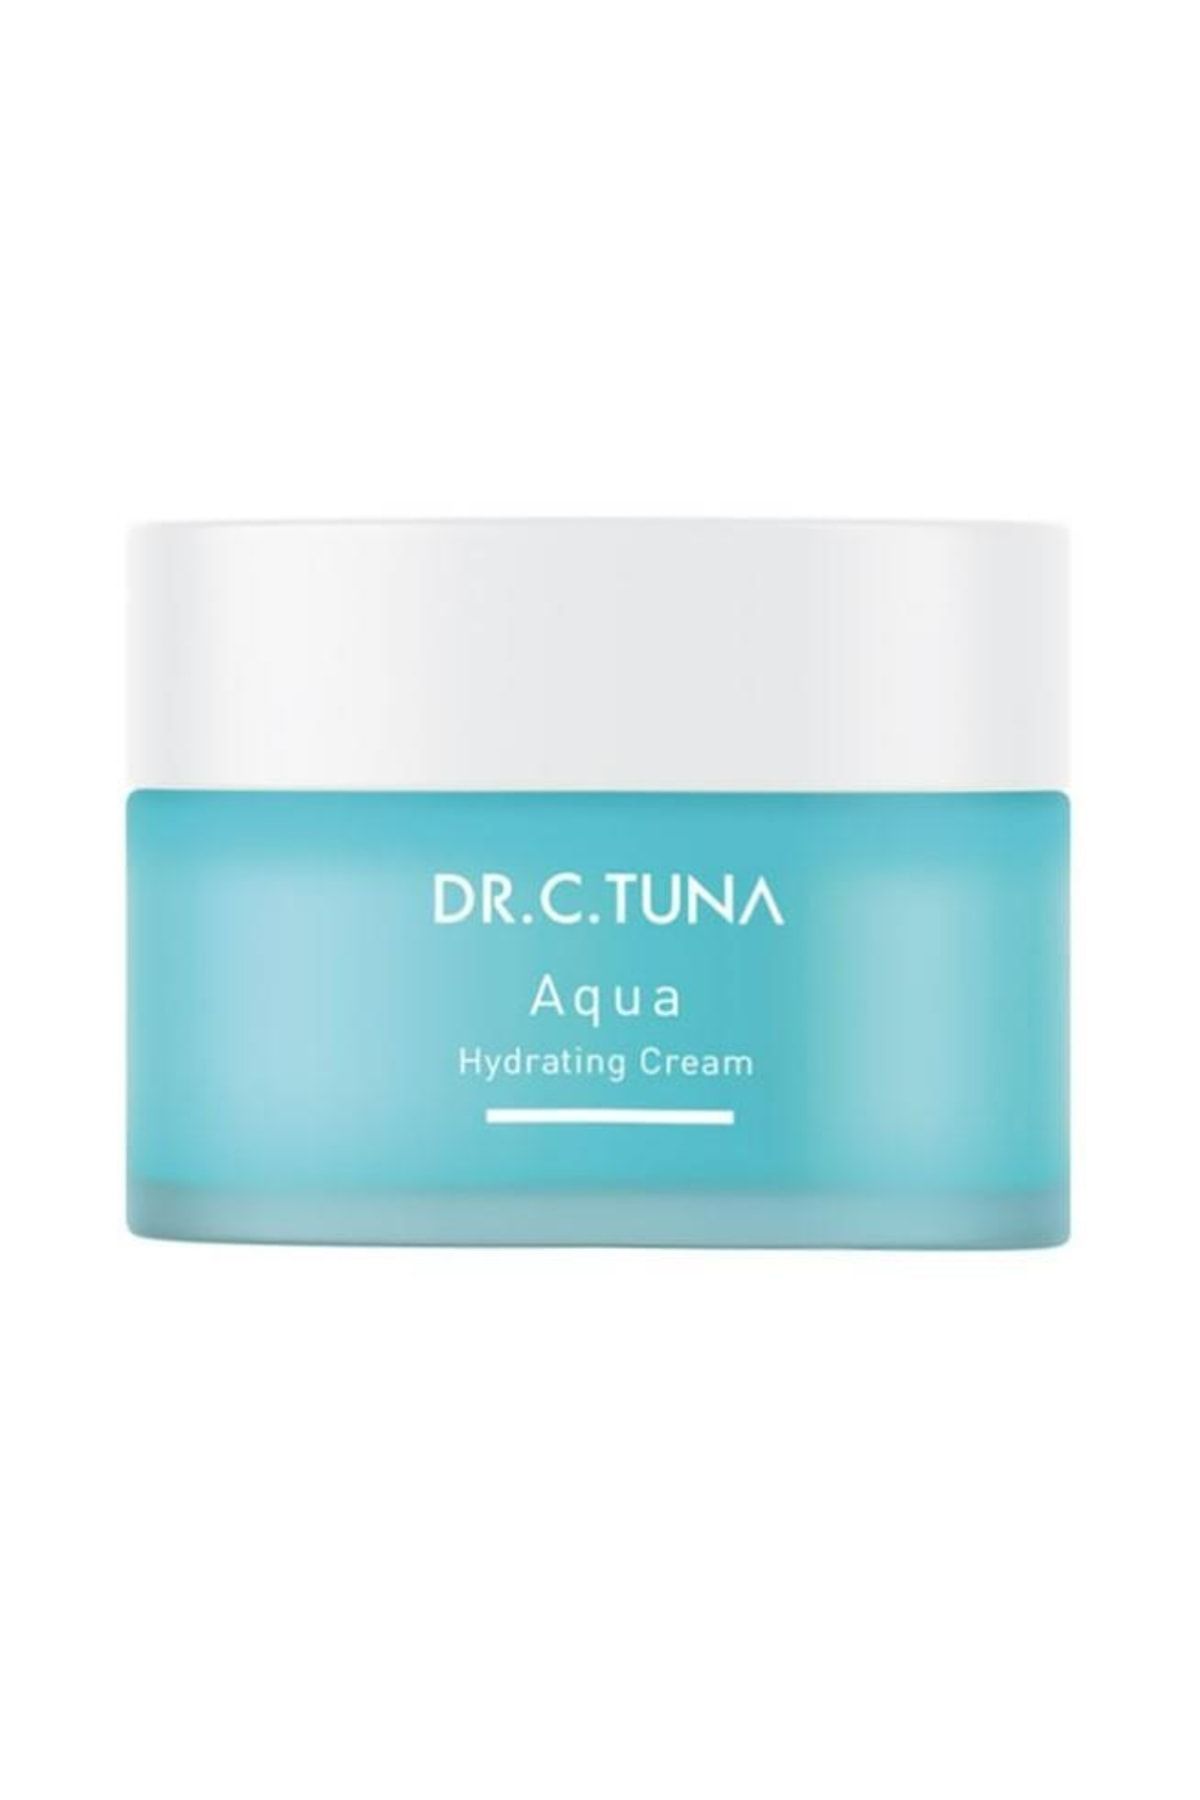 Farmasi Dr.c.tuna Aqua Hydrating Cream 50ml 2021